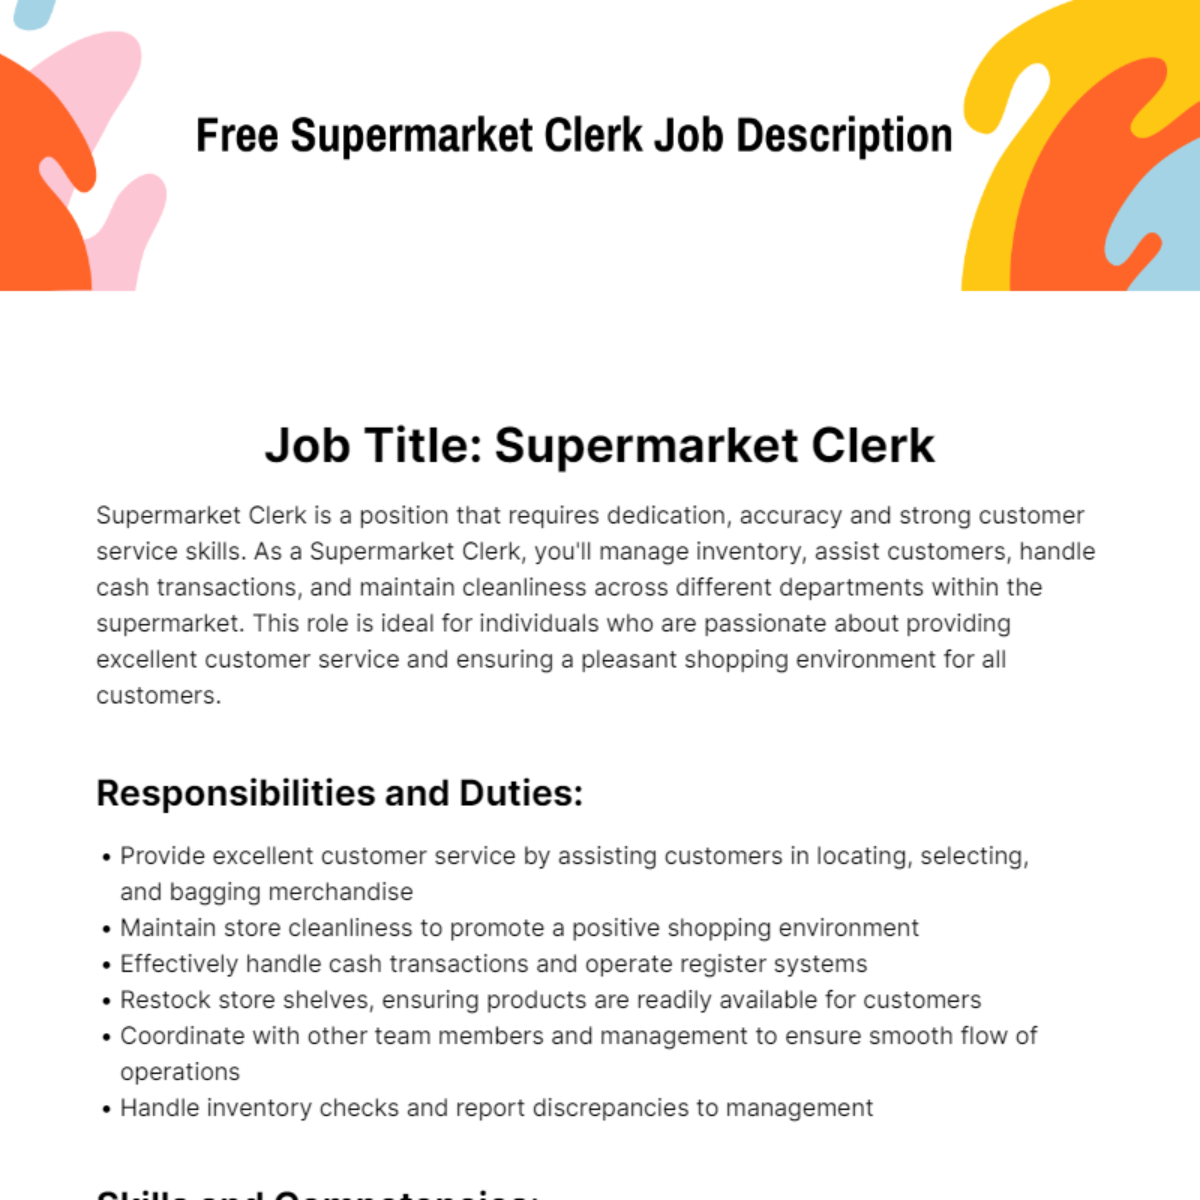 Free Supermarket Clerk Job Description Template